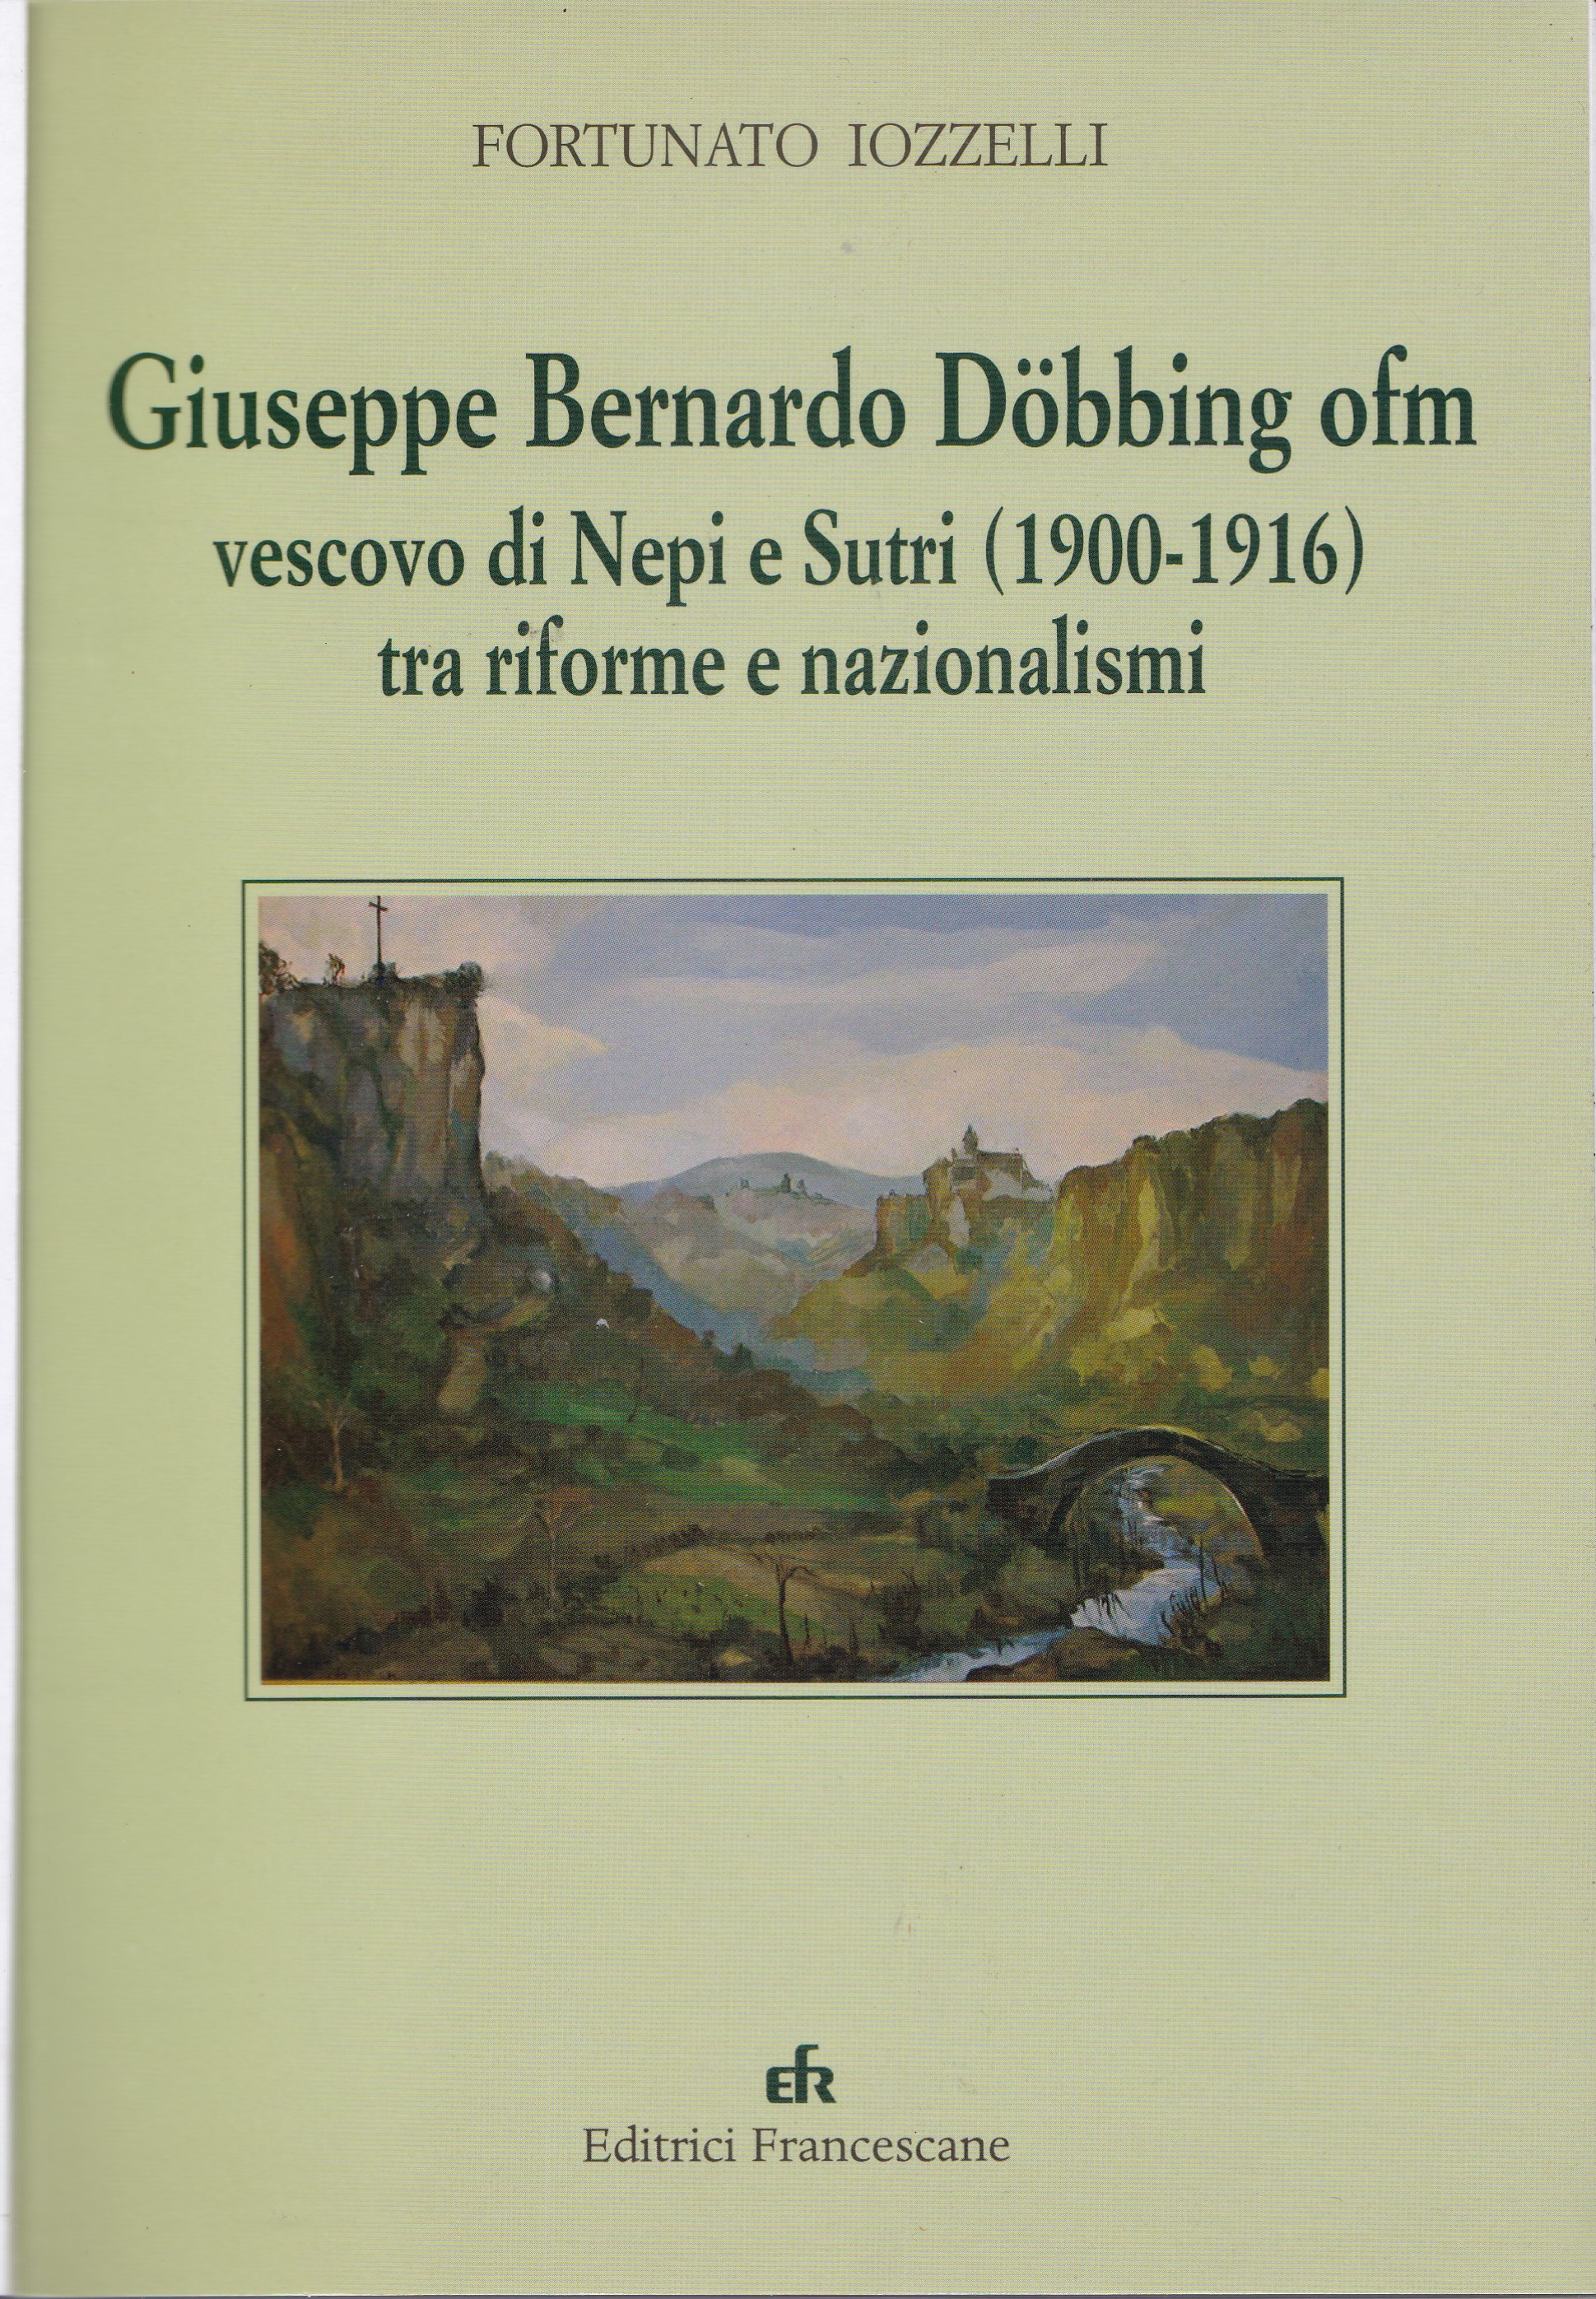 Giuseppe Bernardo Doebbing OFM vescovo di Nepi ee Sutri (1900-1916) tra riforme e nazionalismi. - Fortunato Jozzelli